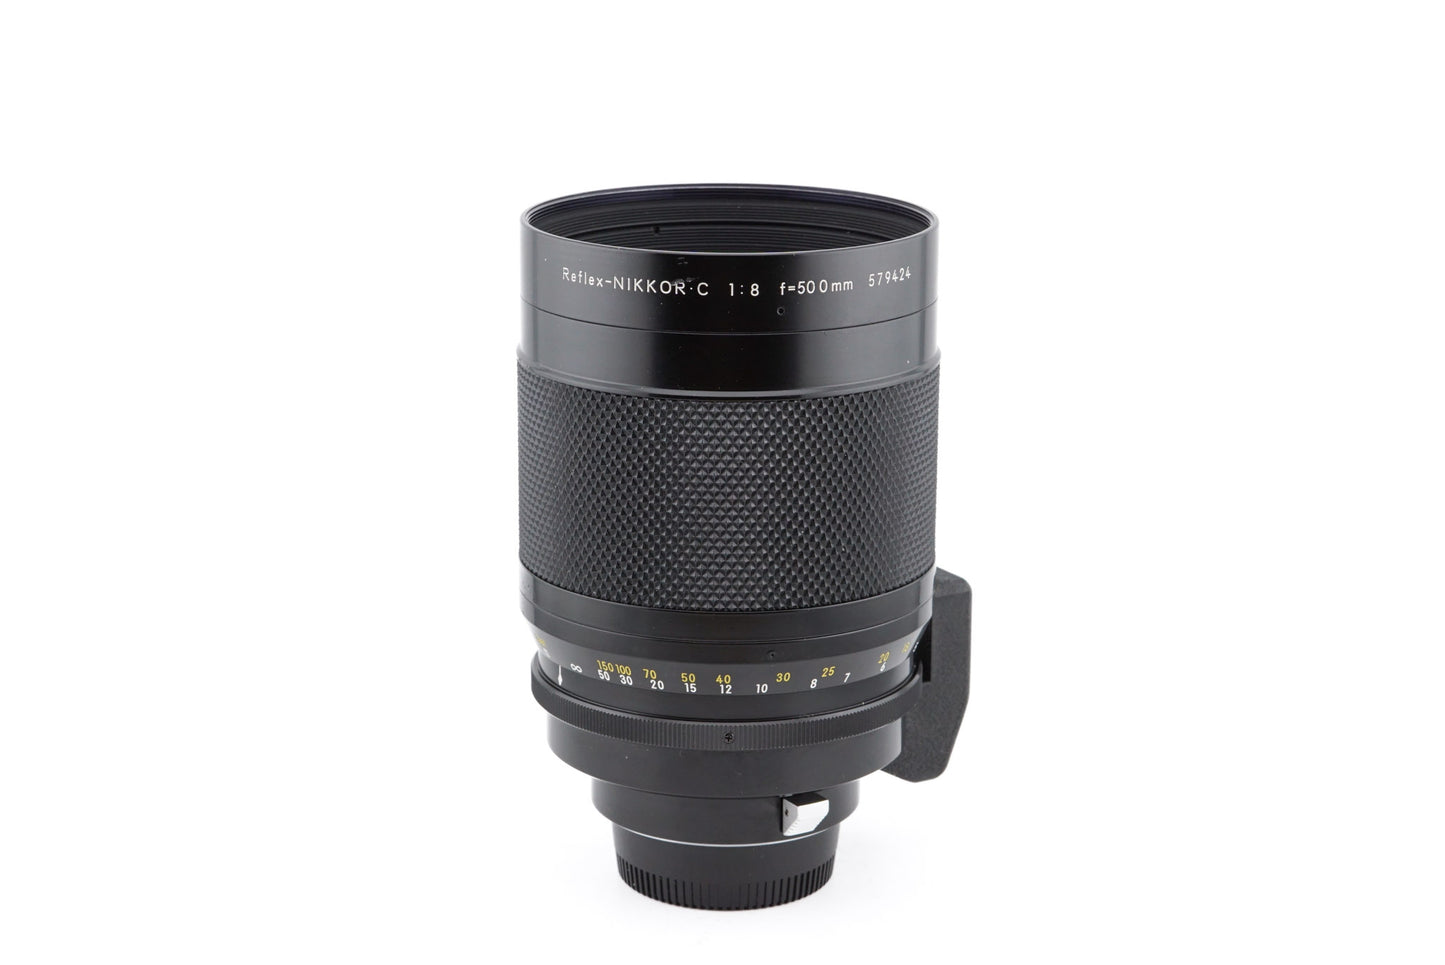 Nikon 500mm f8 Reflex-Nikkor.C - Lens